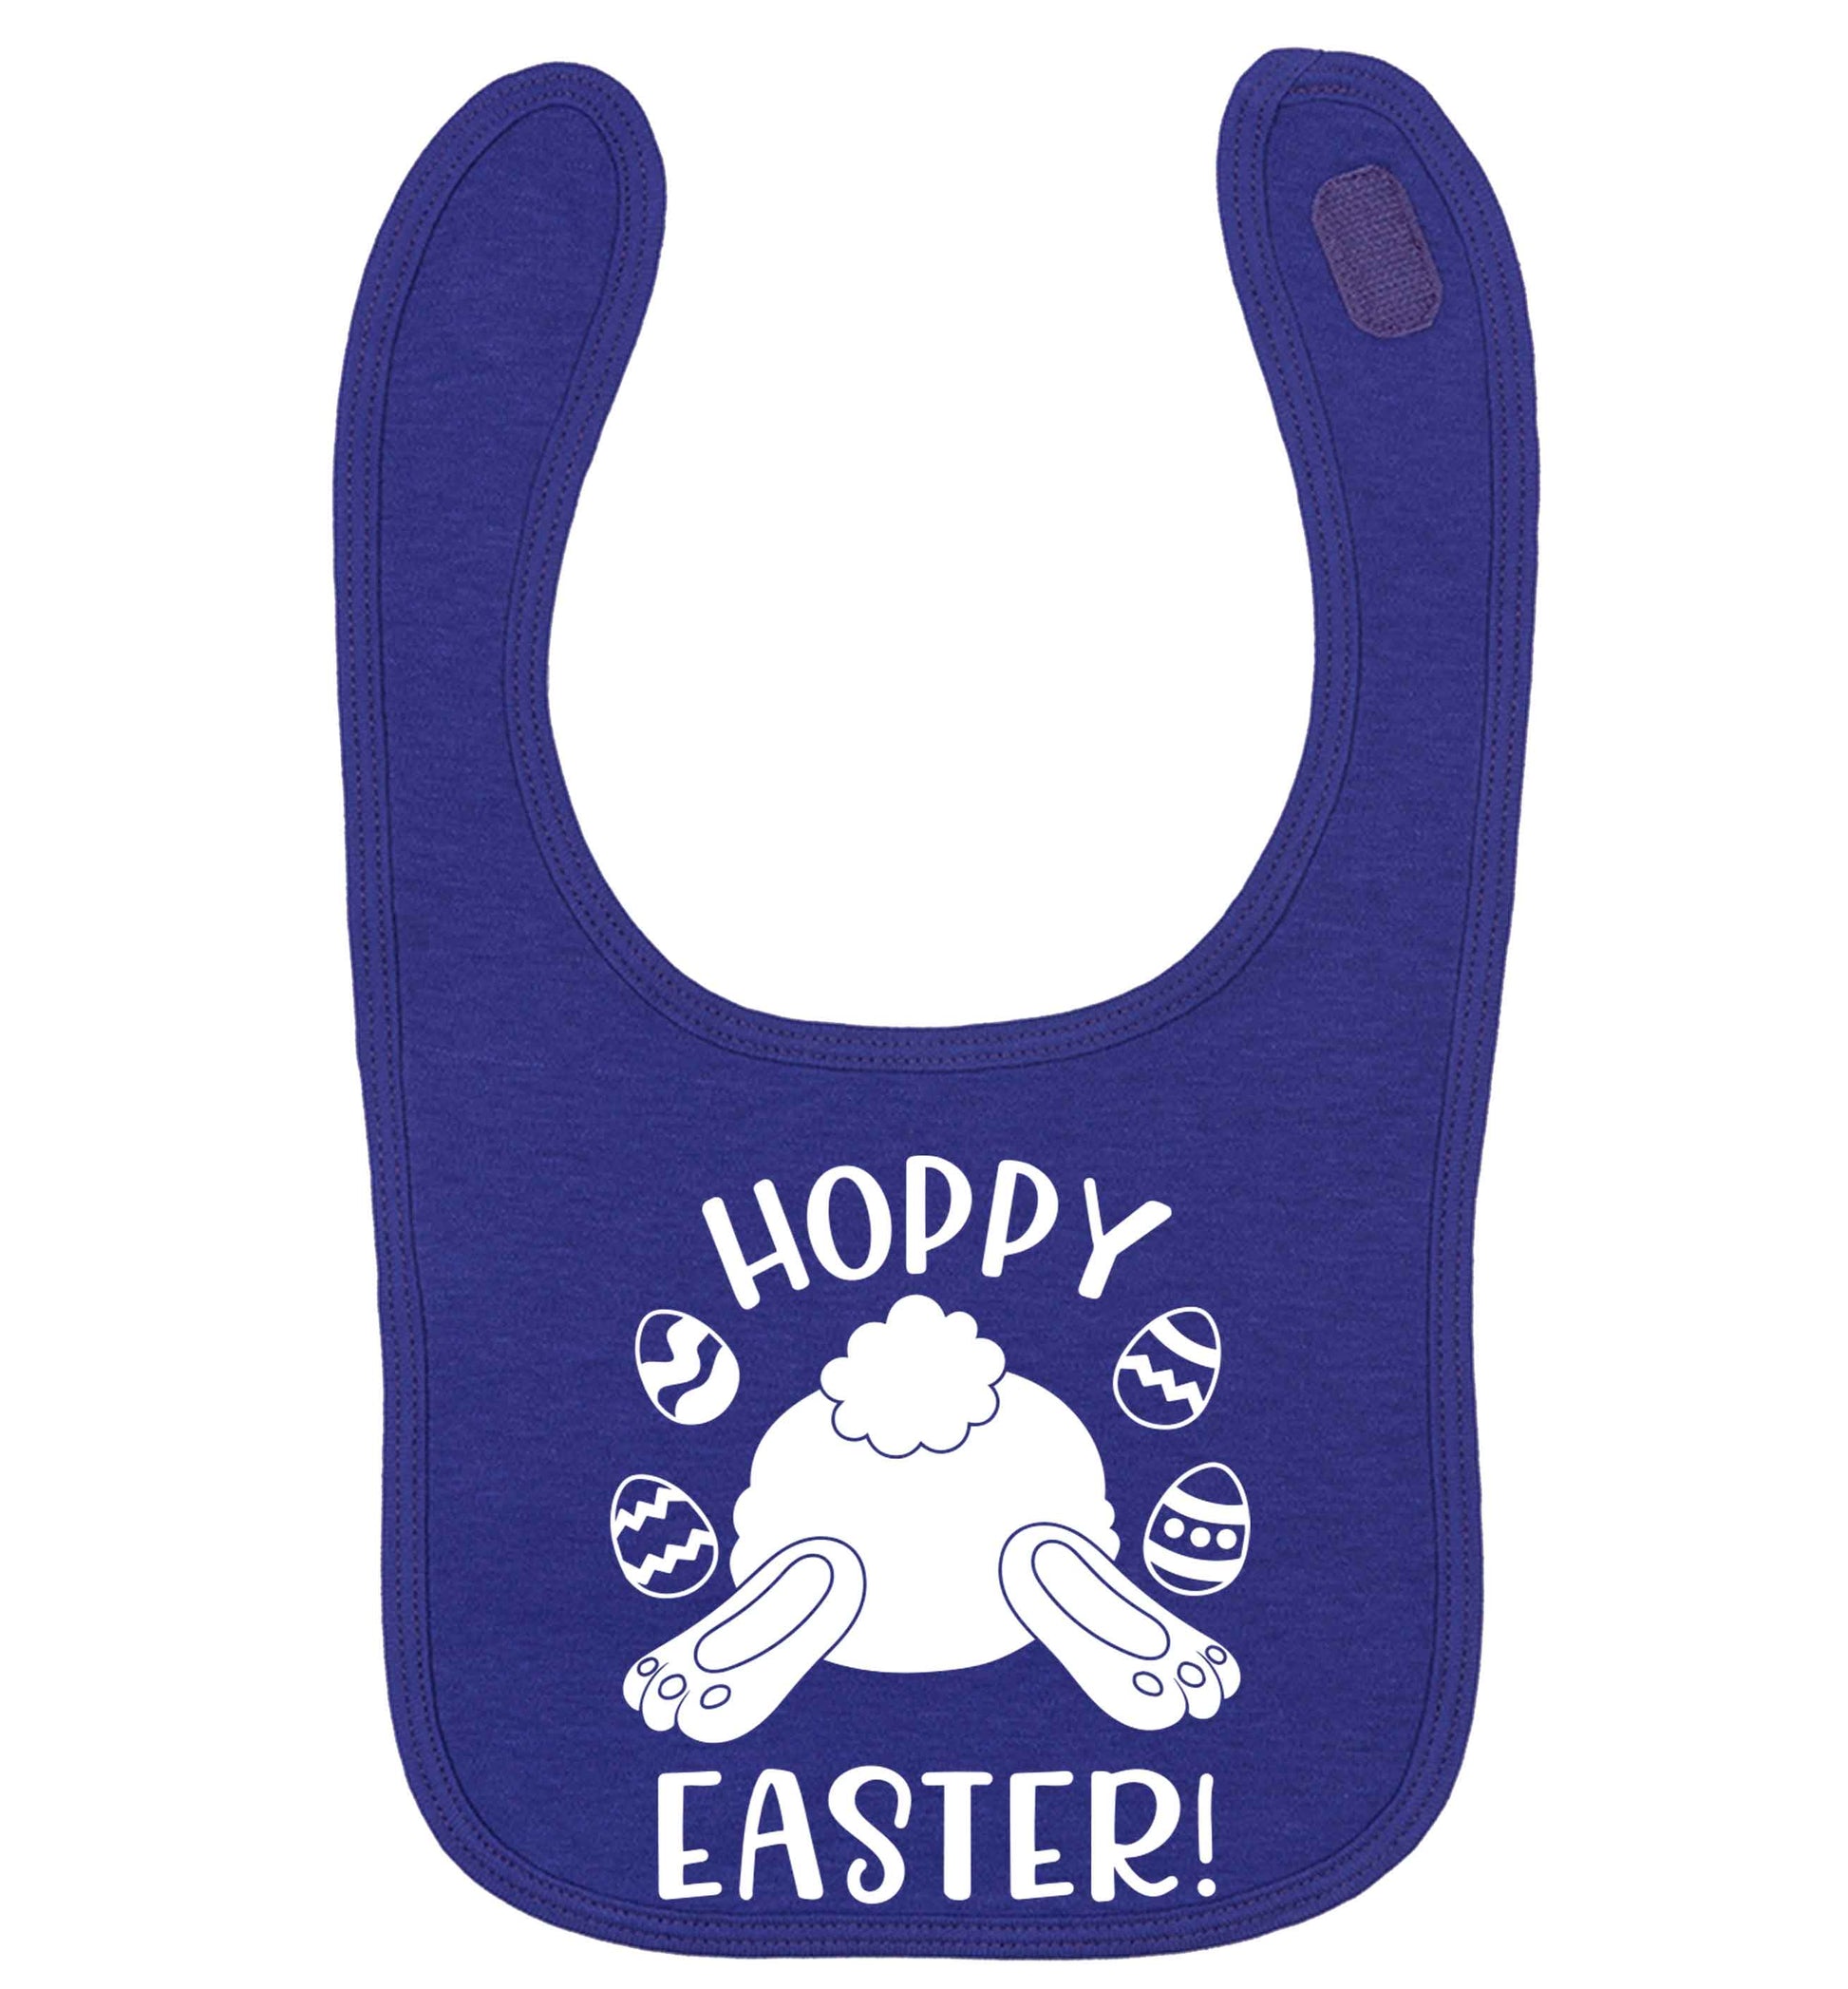 Hoppy Easter | baby bib